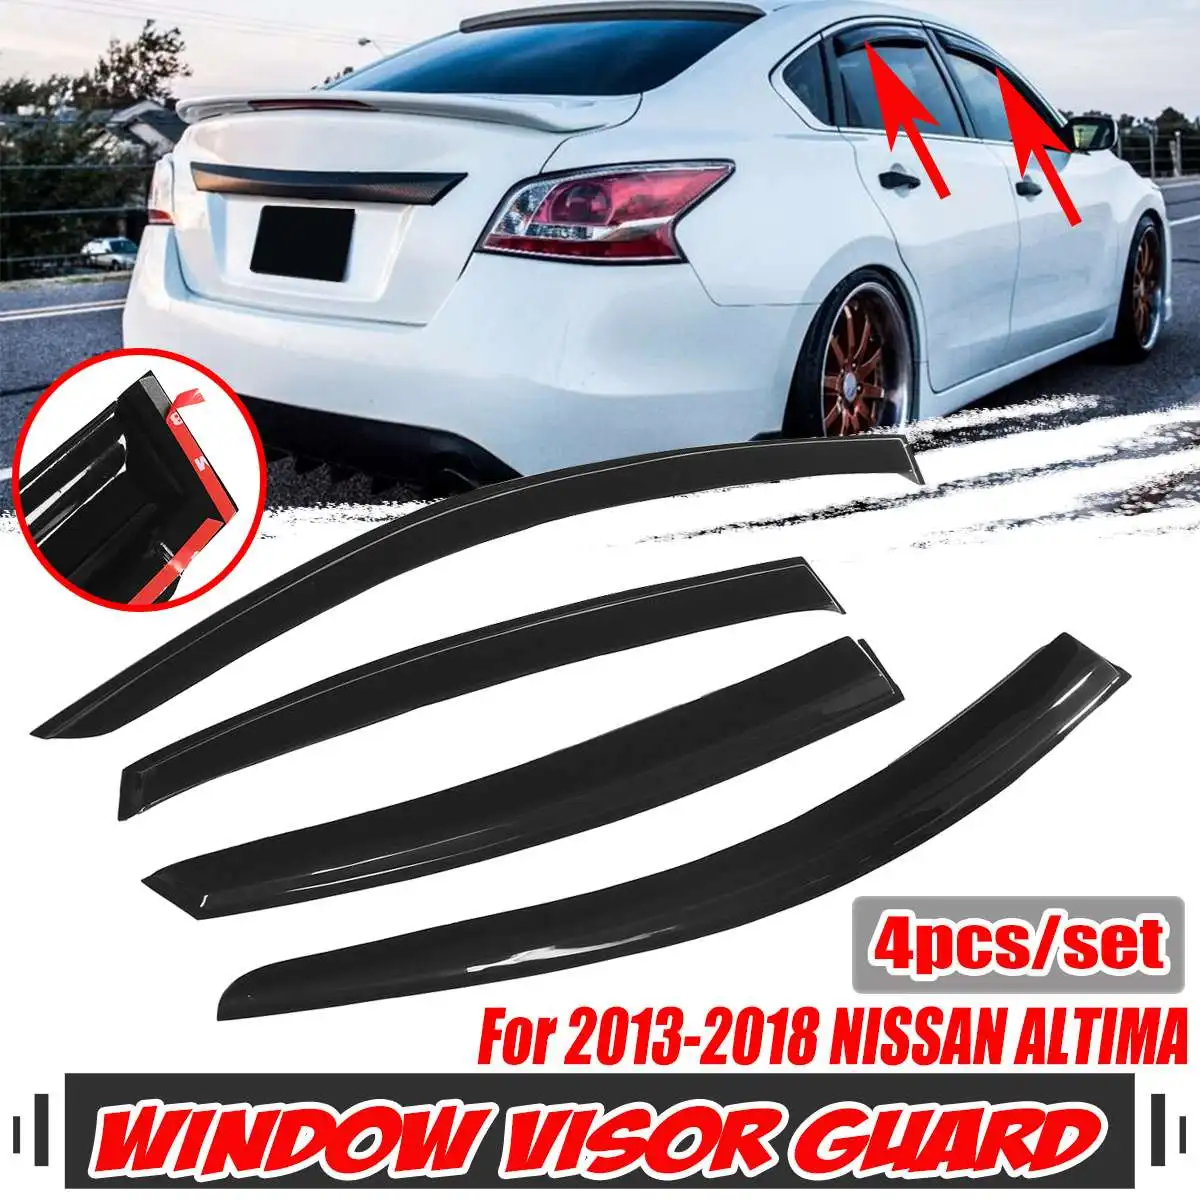 

Car Window Visor Guard Vent Rain Sun Guard For NISSAN For ALTIMA 2013-2018 Weatherproof Window Visor Deflector Shade Guard Vent